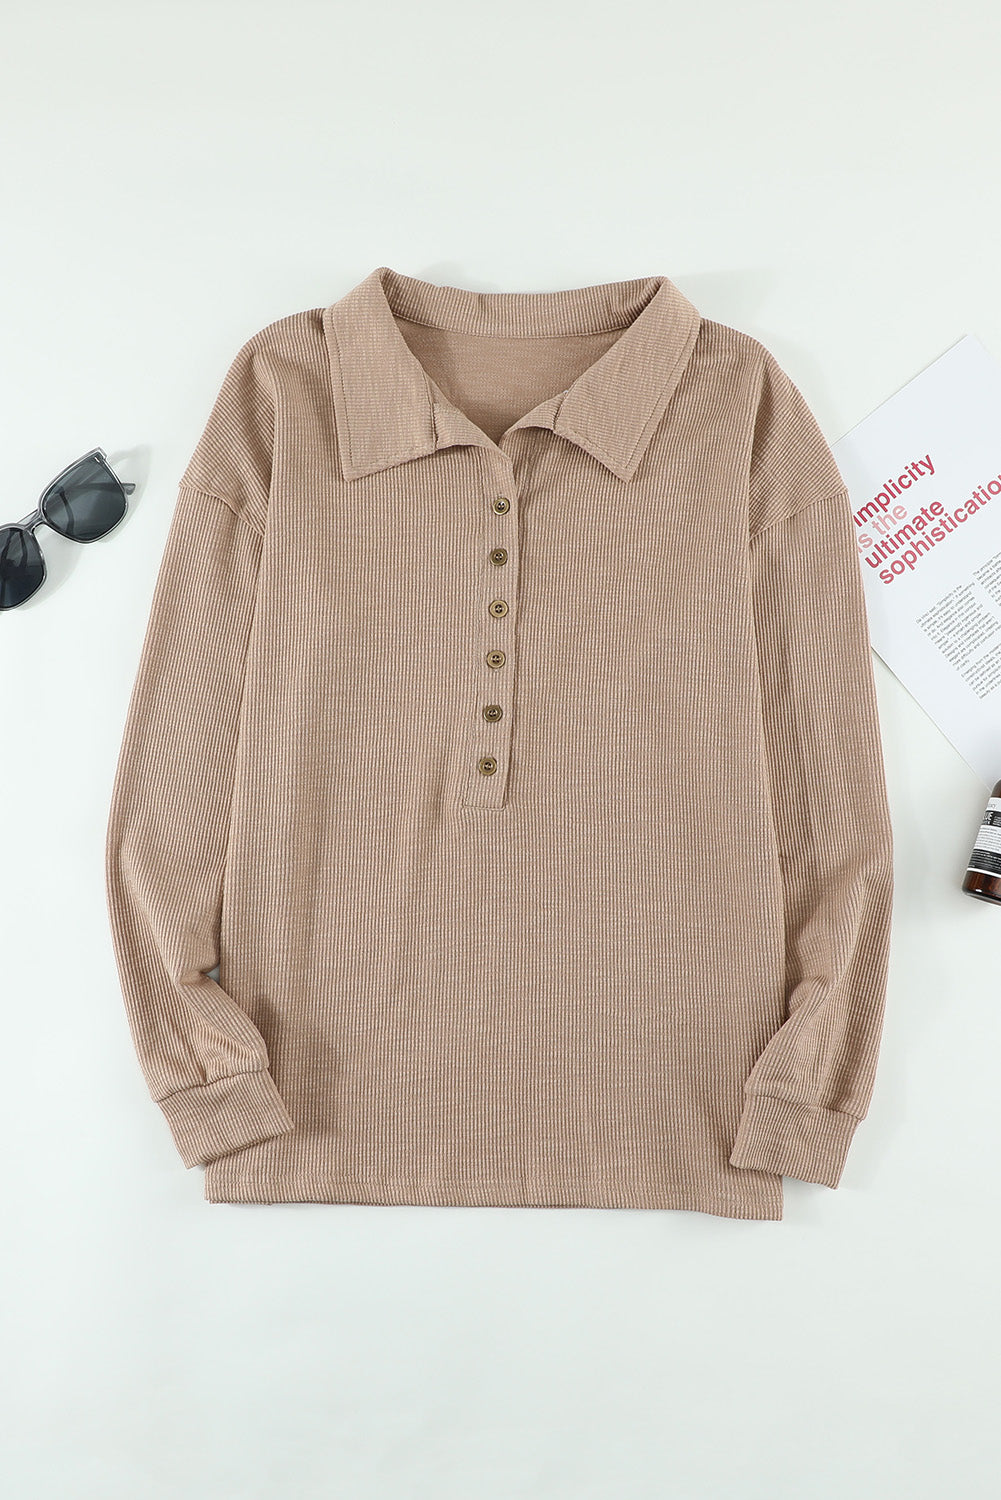 Khaki Button Front Turn-down Neck Knit Top Long Sleeve Tops JT's Designer Fashion